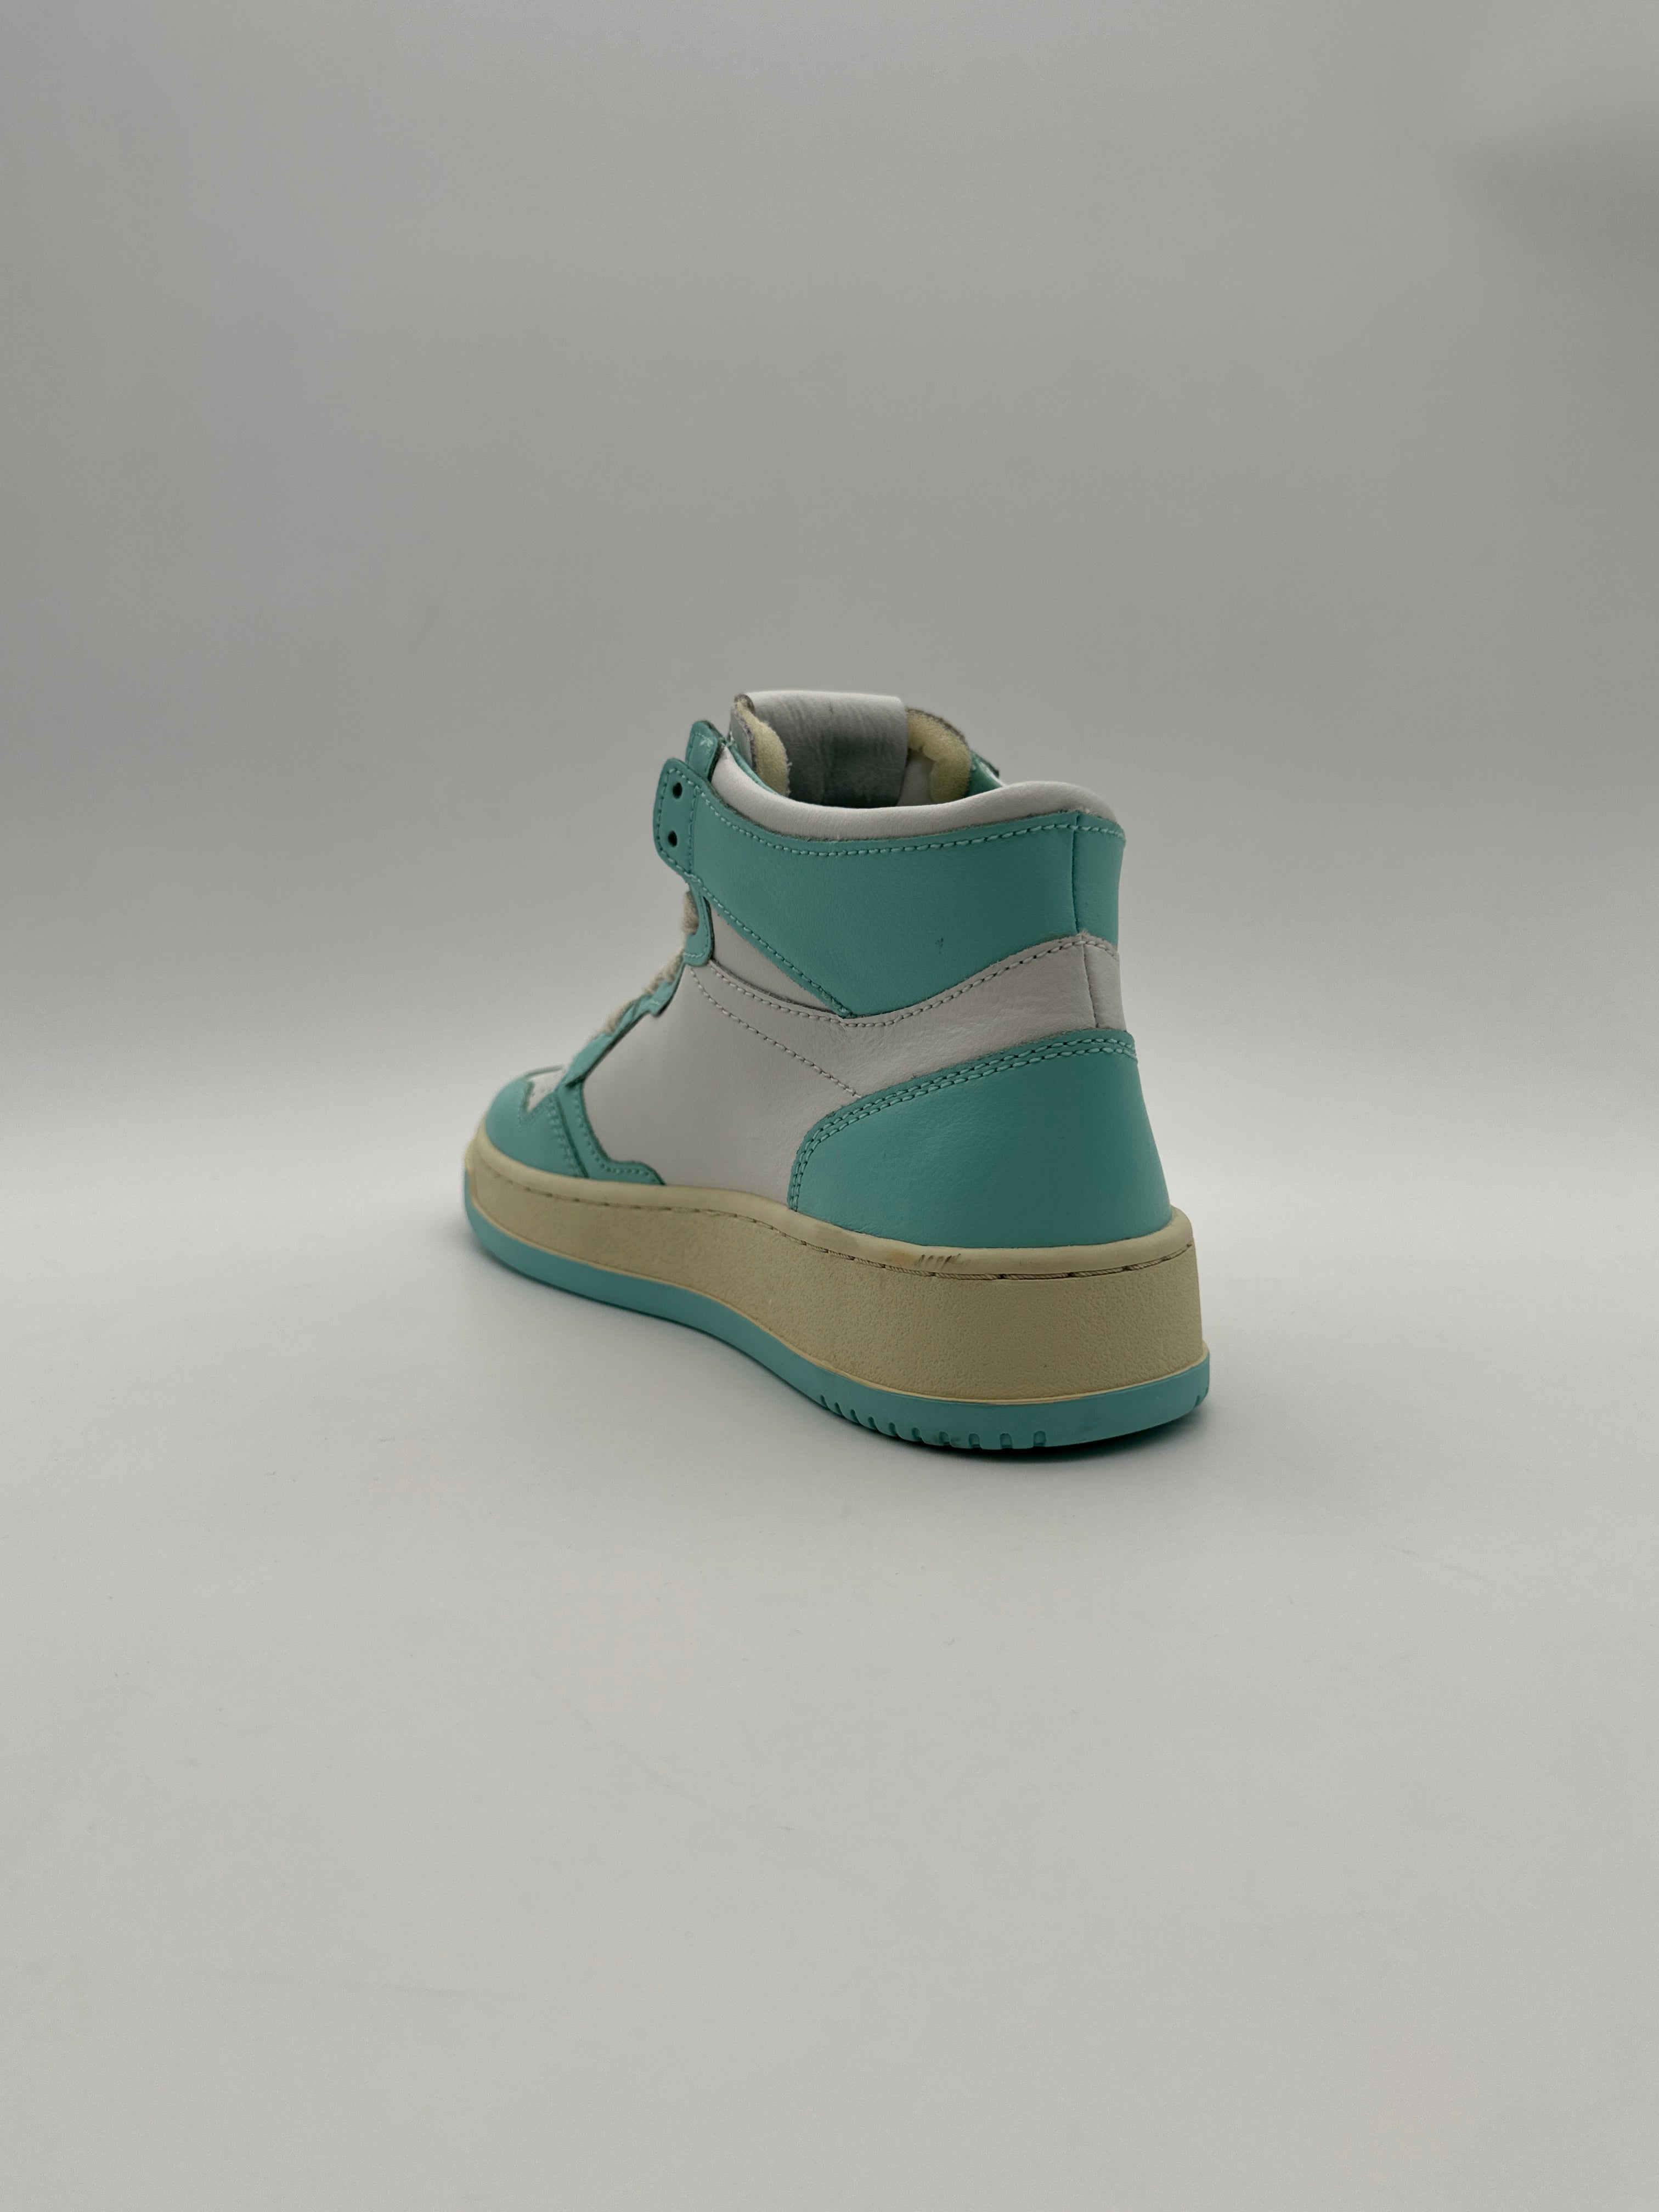 Autry 01 Mid Sneakers